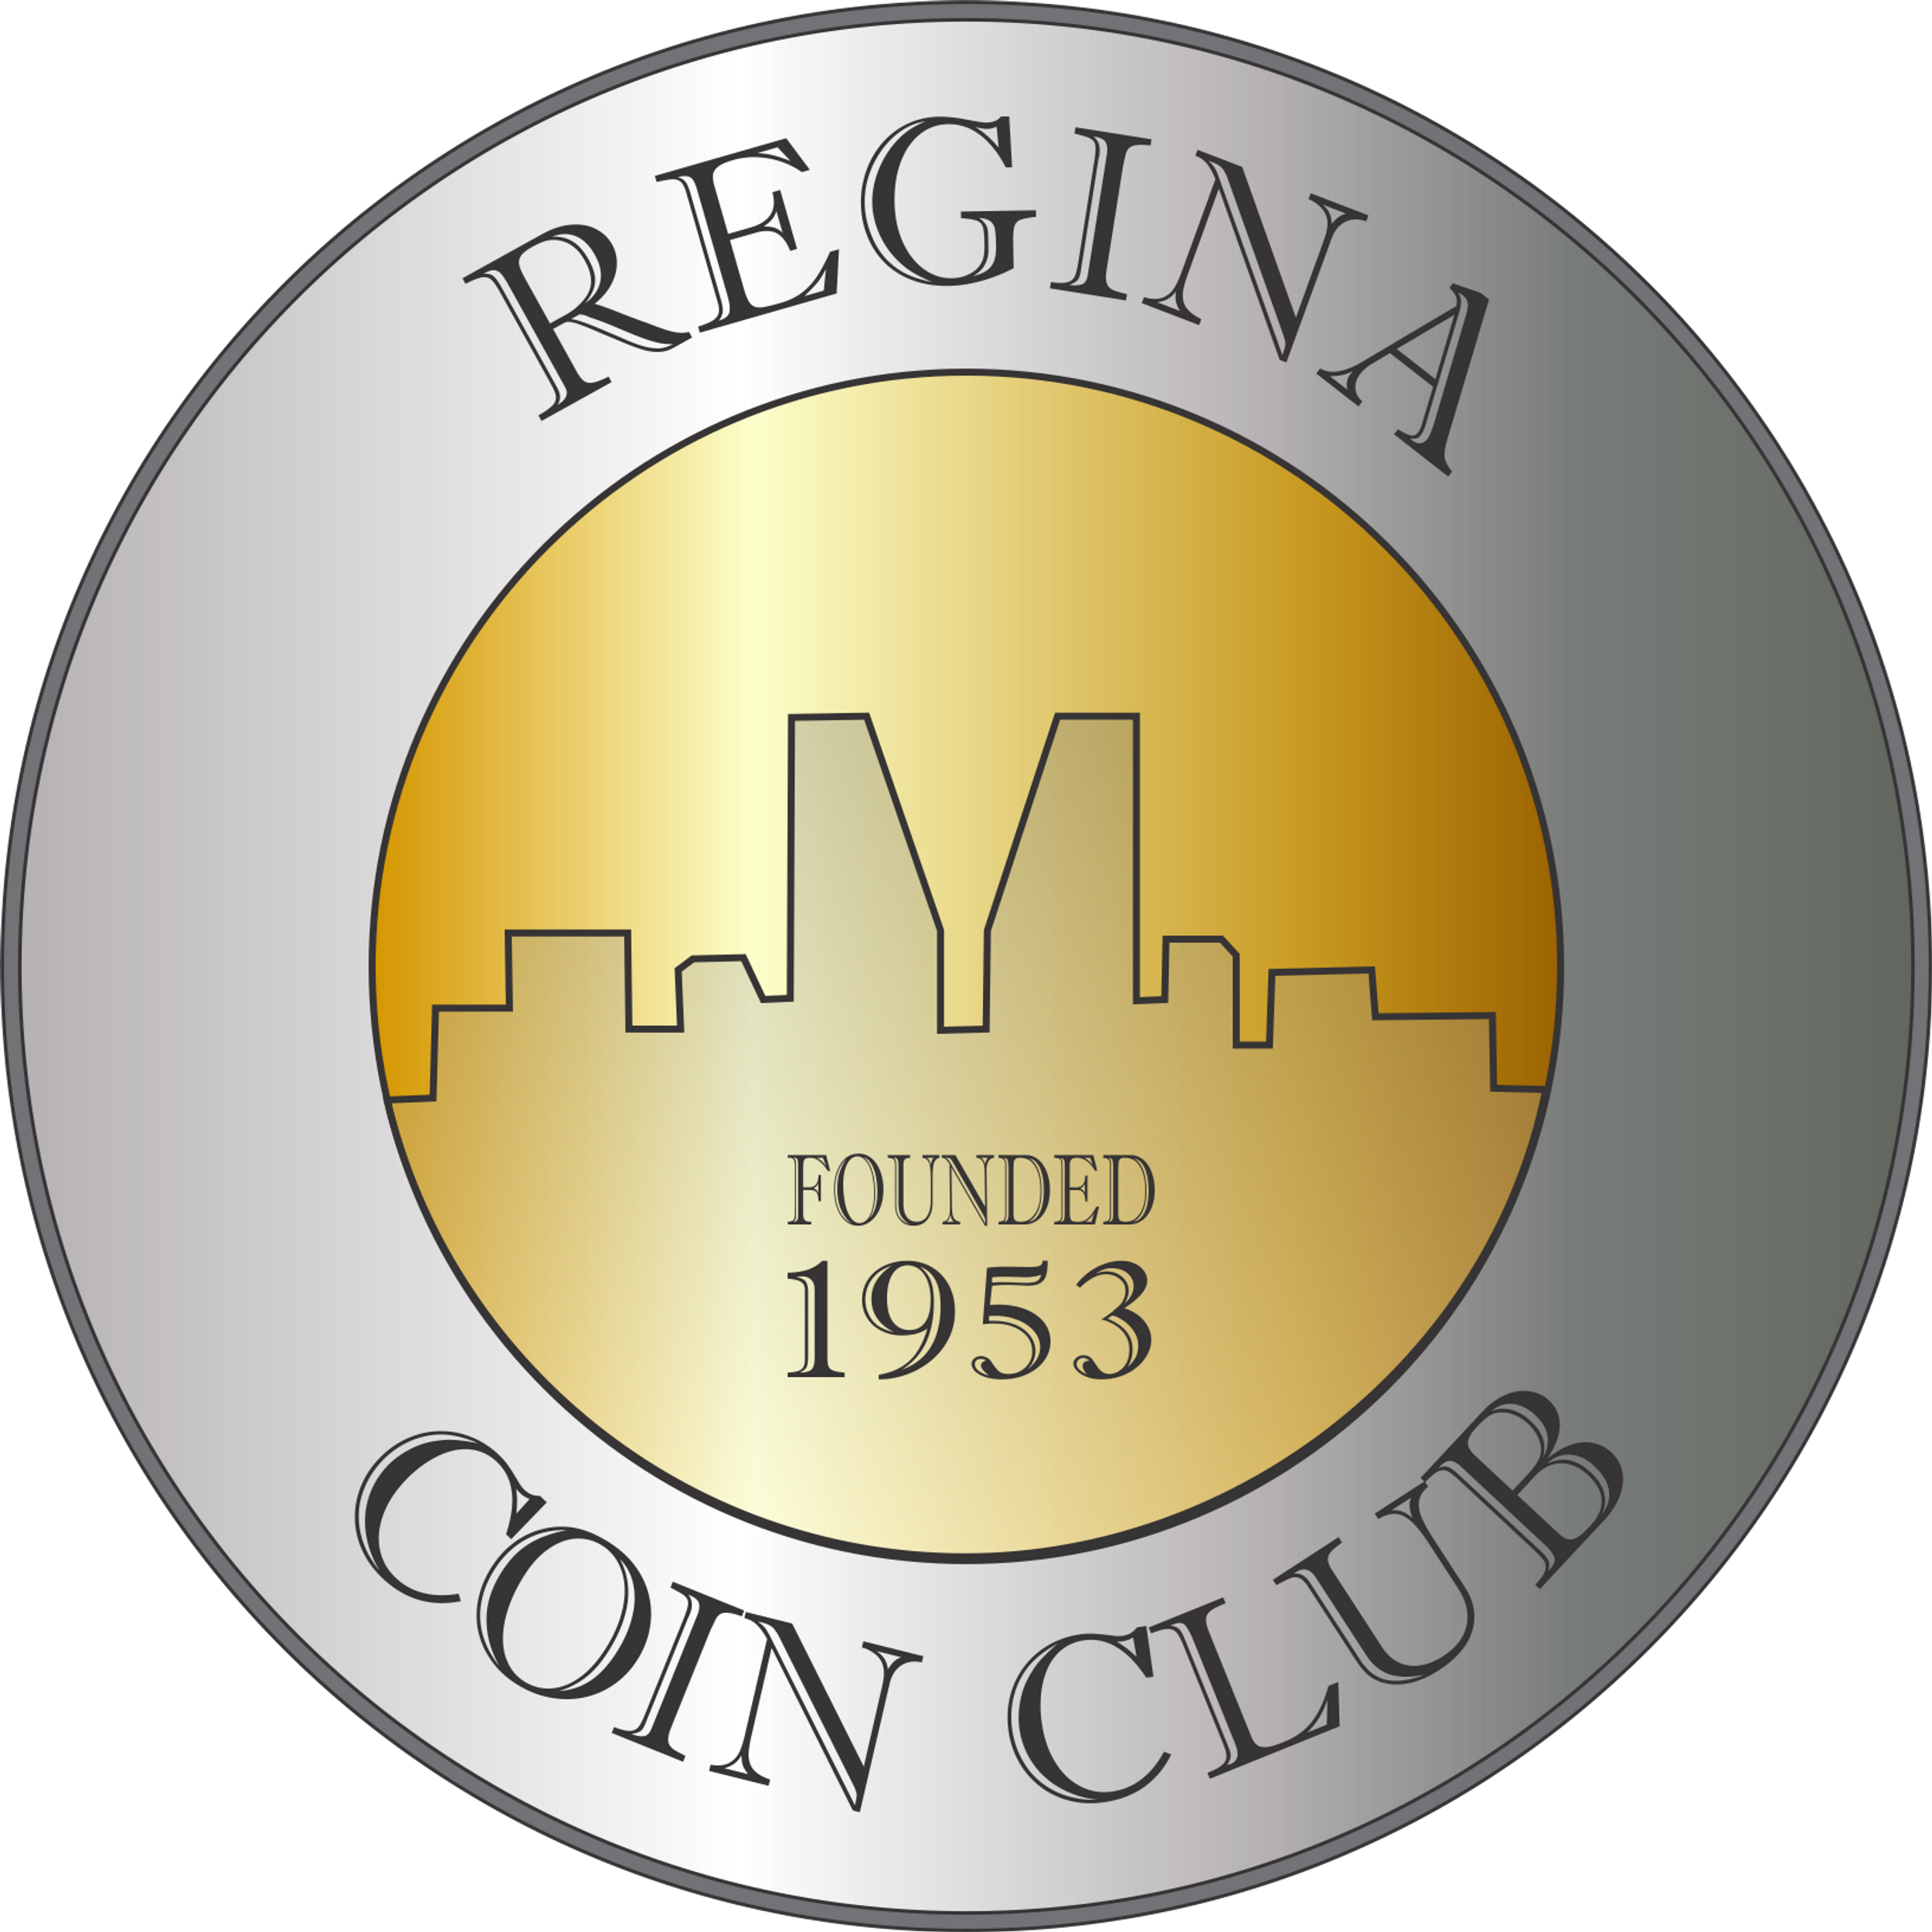 Crescent City Coin Club - Coin Show